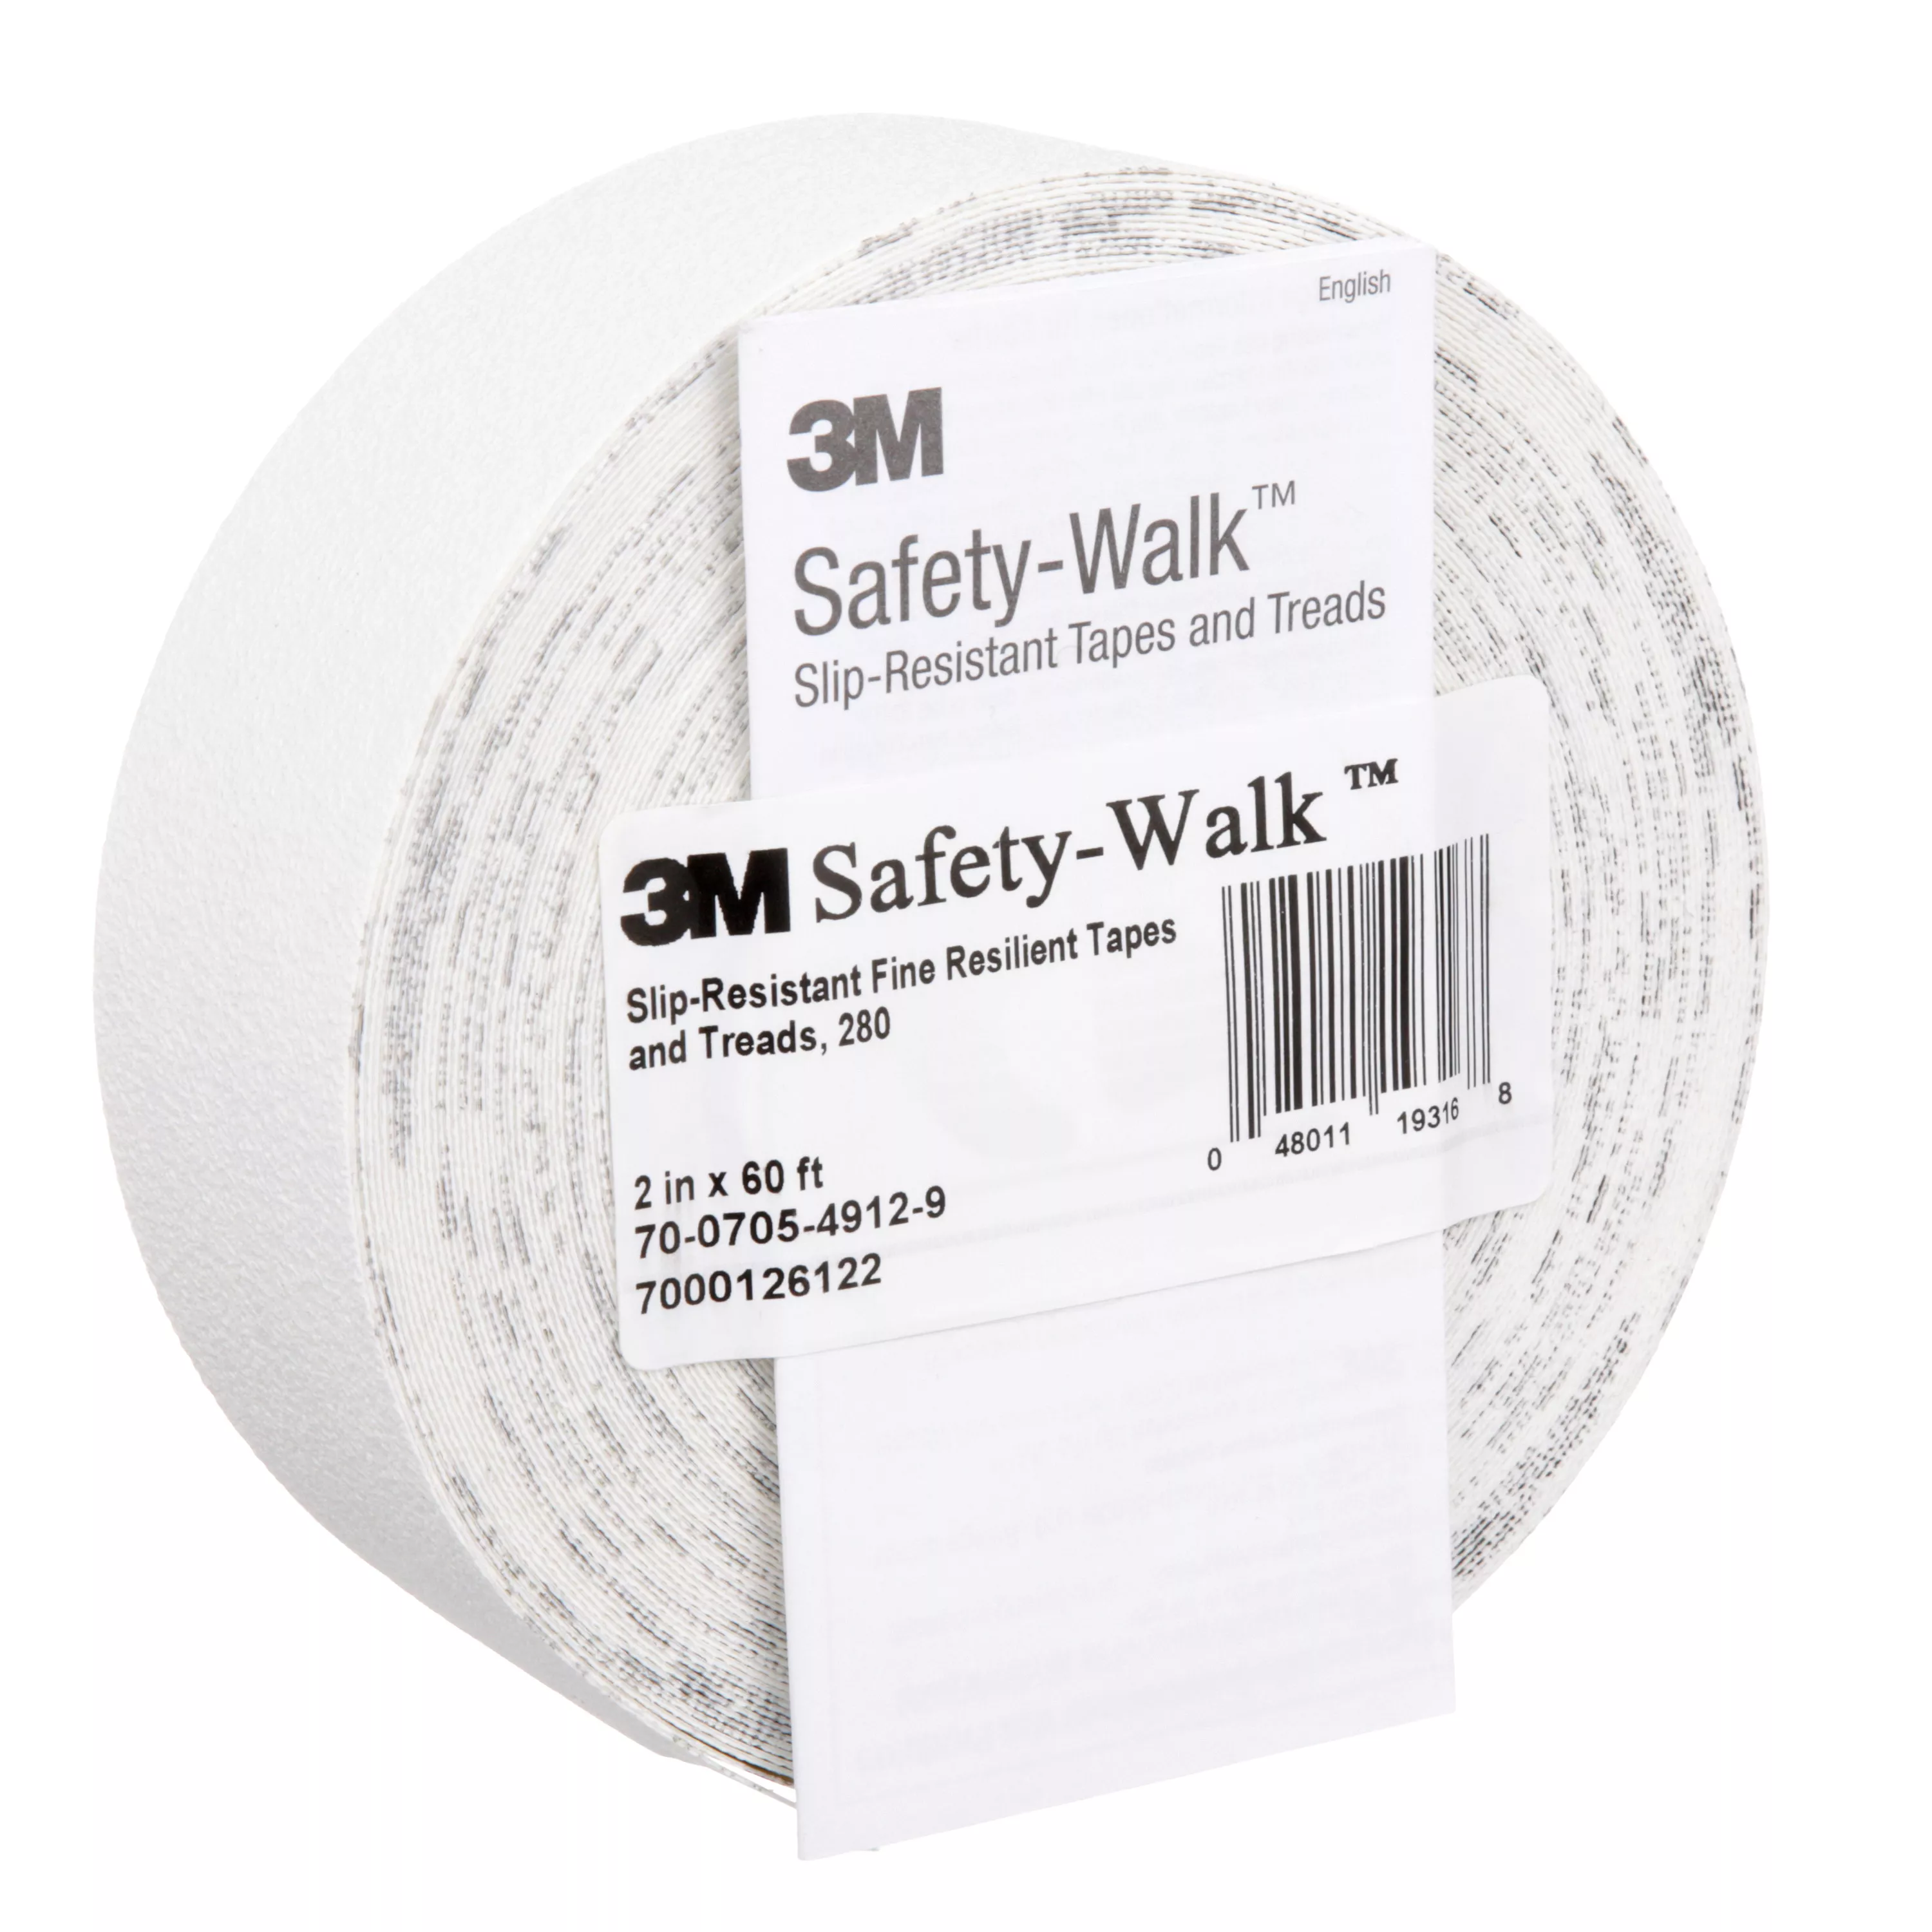 SKU 7000126122 | 3M™ Safety-Walk™ Slip-Resistant Fine Resilient Tapes & Treads 280